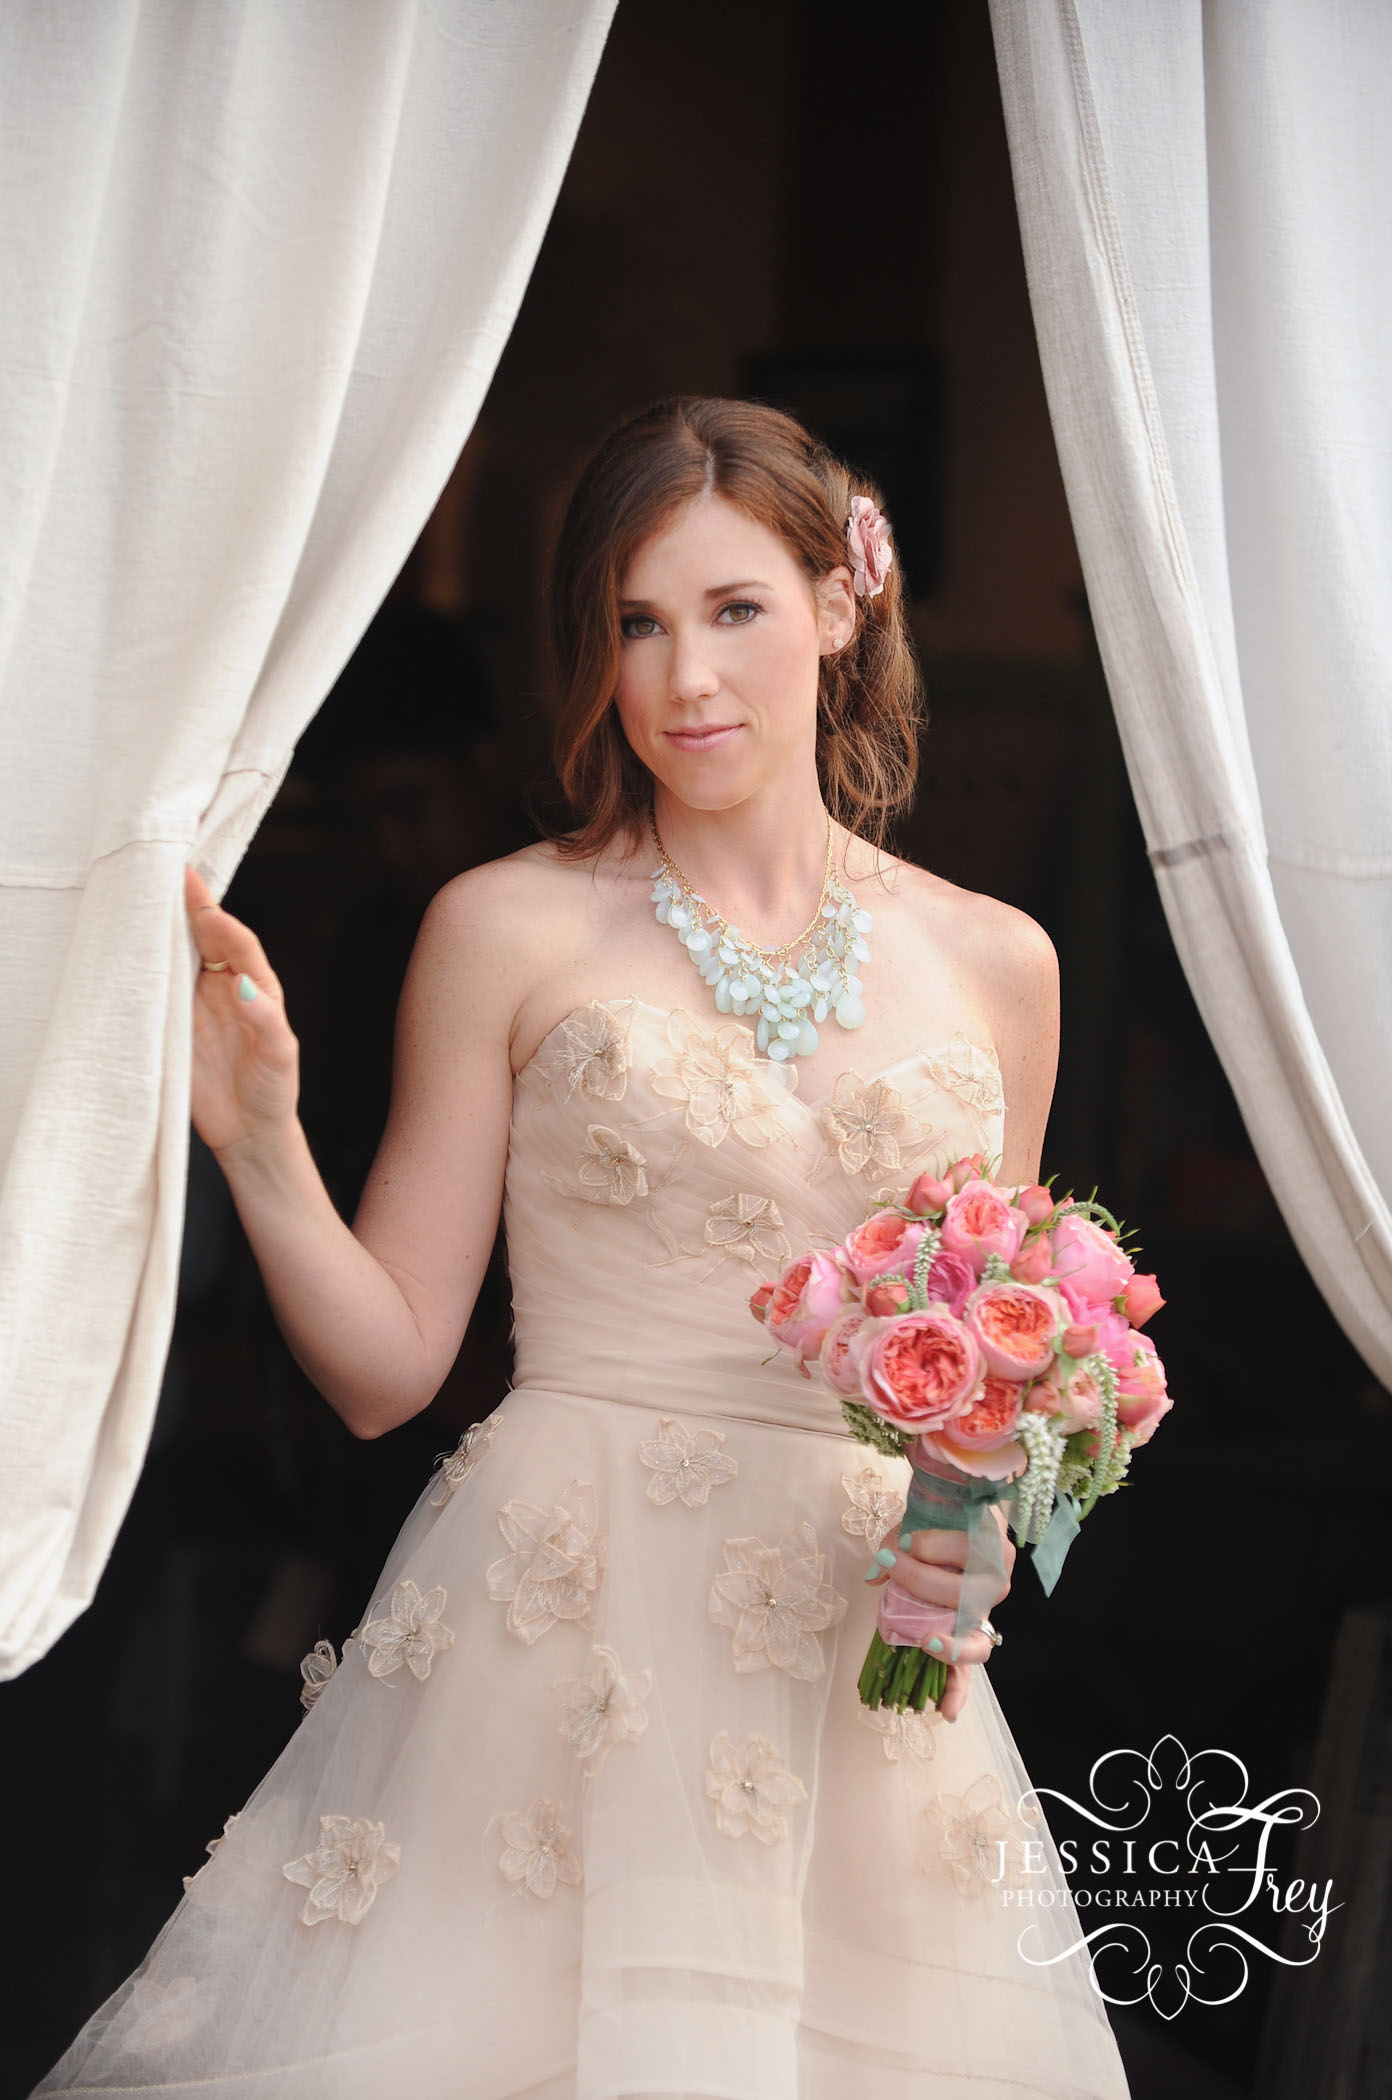 Jessica Frey Photography, mint and blush wedding